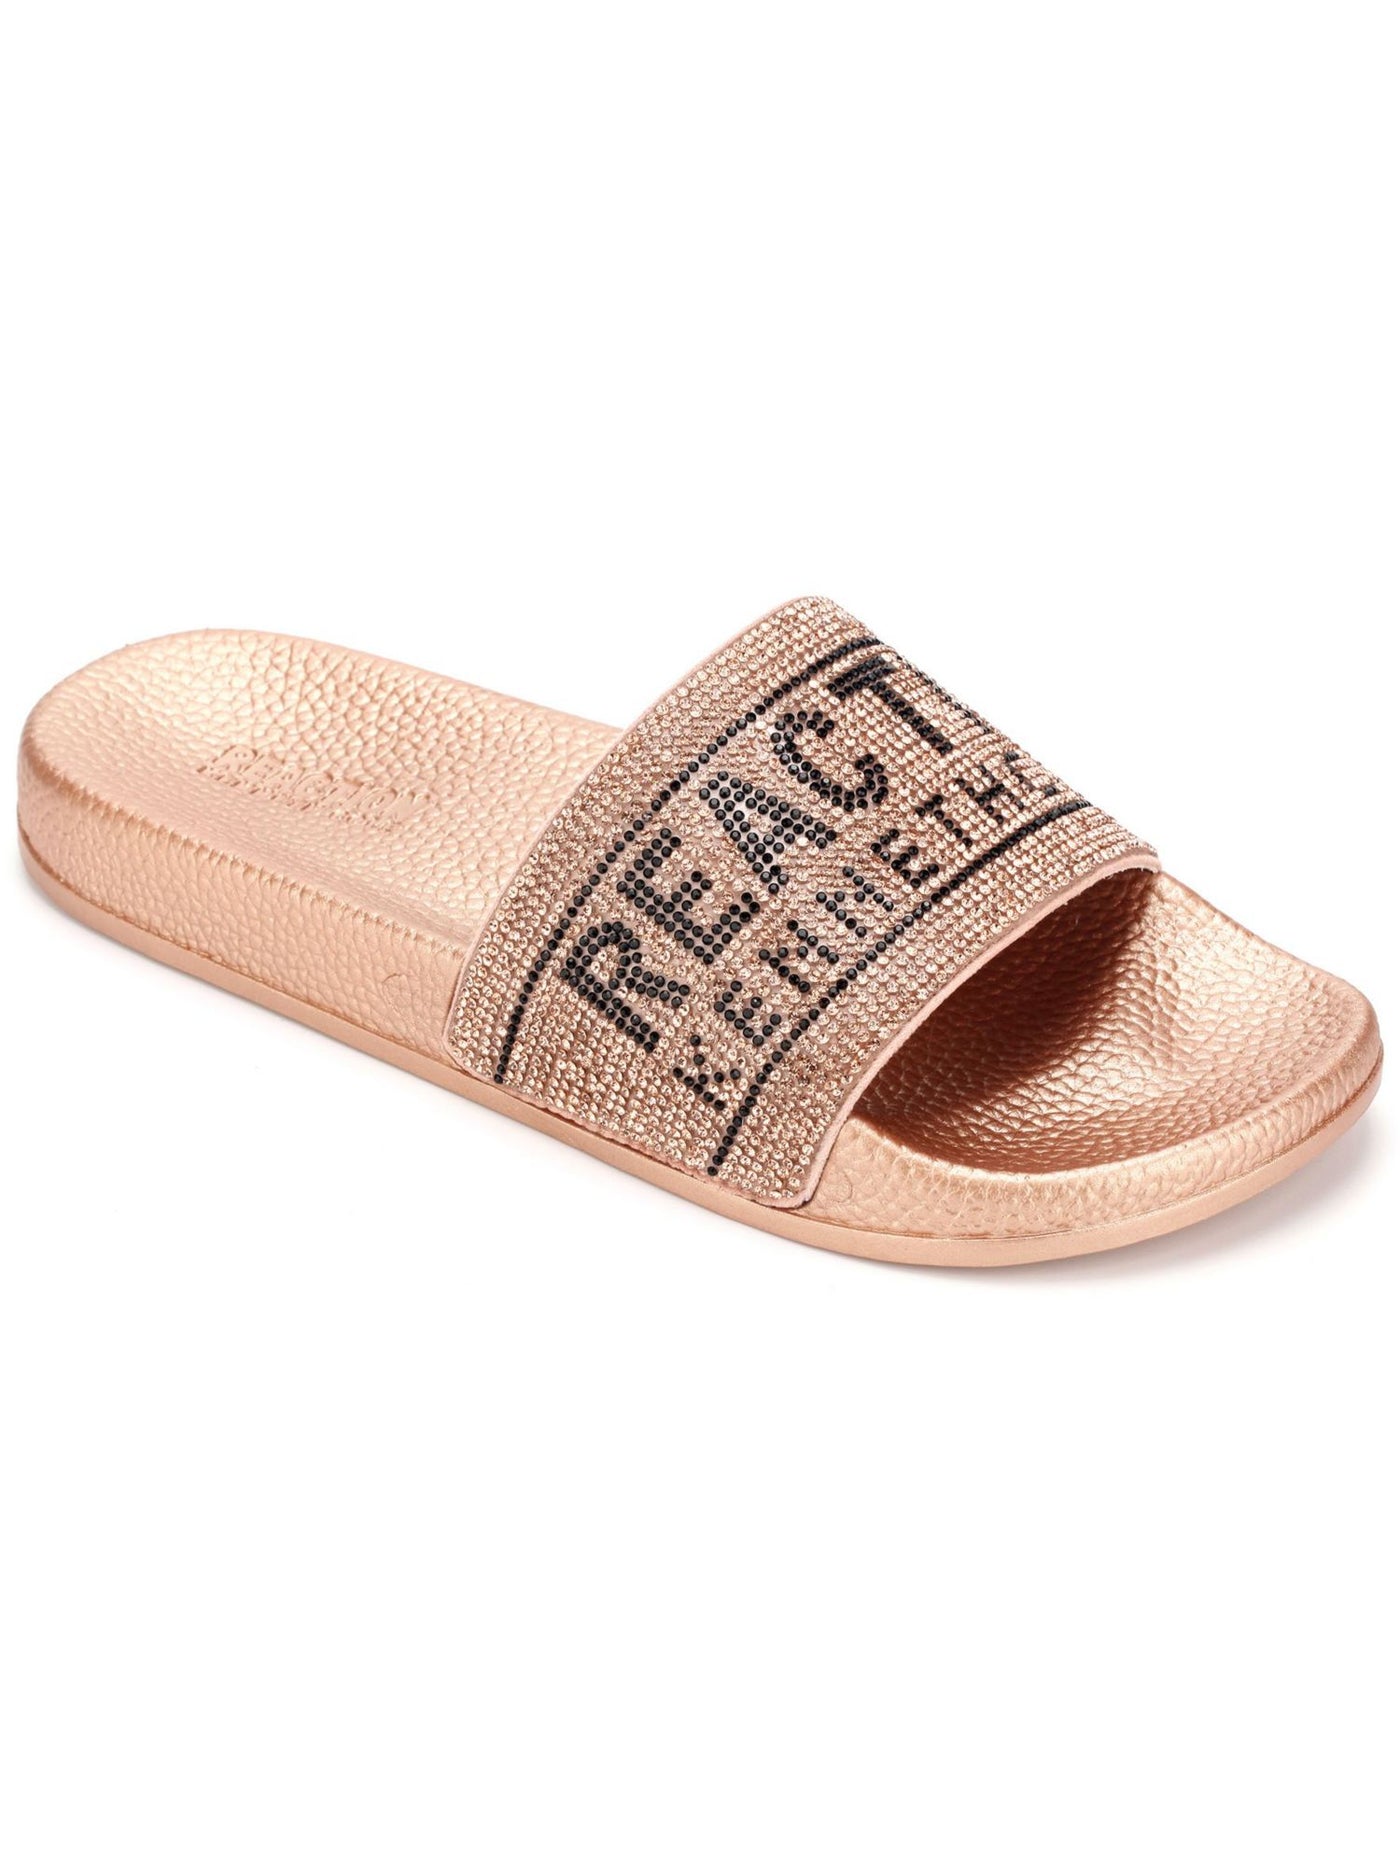 REACTION KENNETH COLE Womens Gold Logo Rhinestone Comfort Screen Jewel Round Toe Slip On Slide Sandals Shoes 9